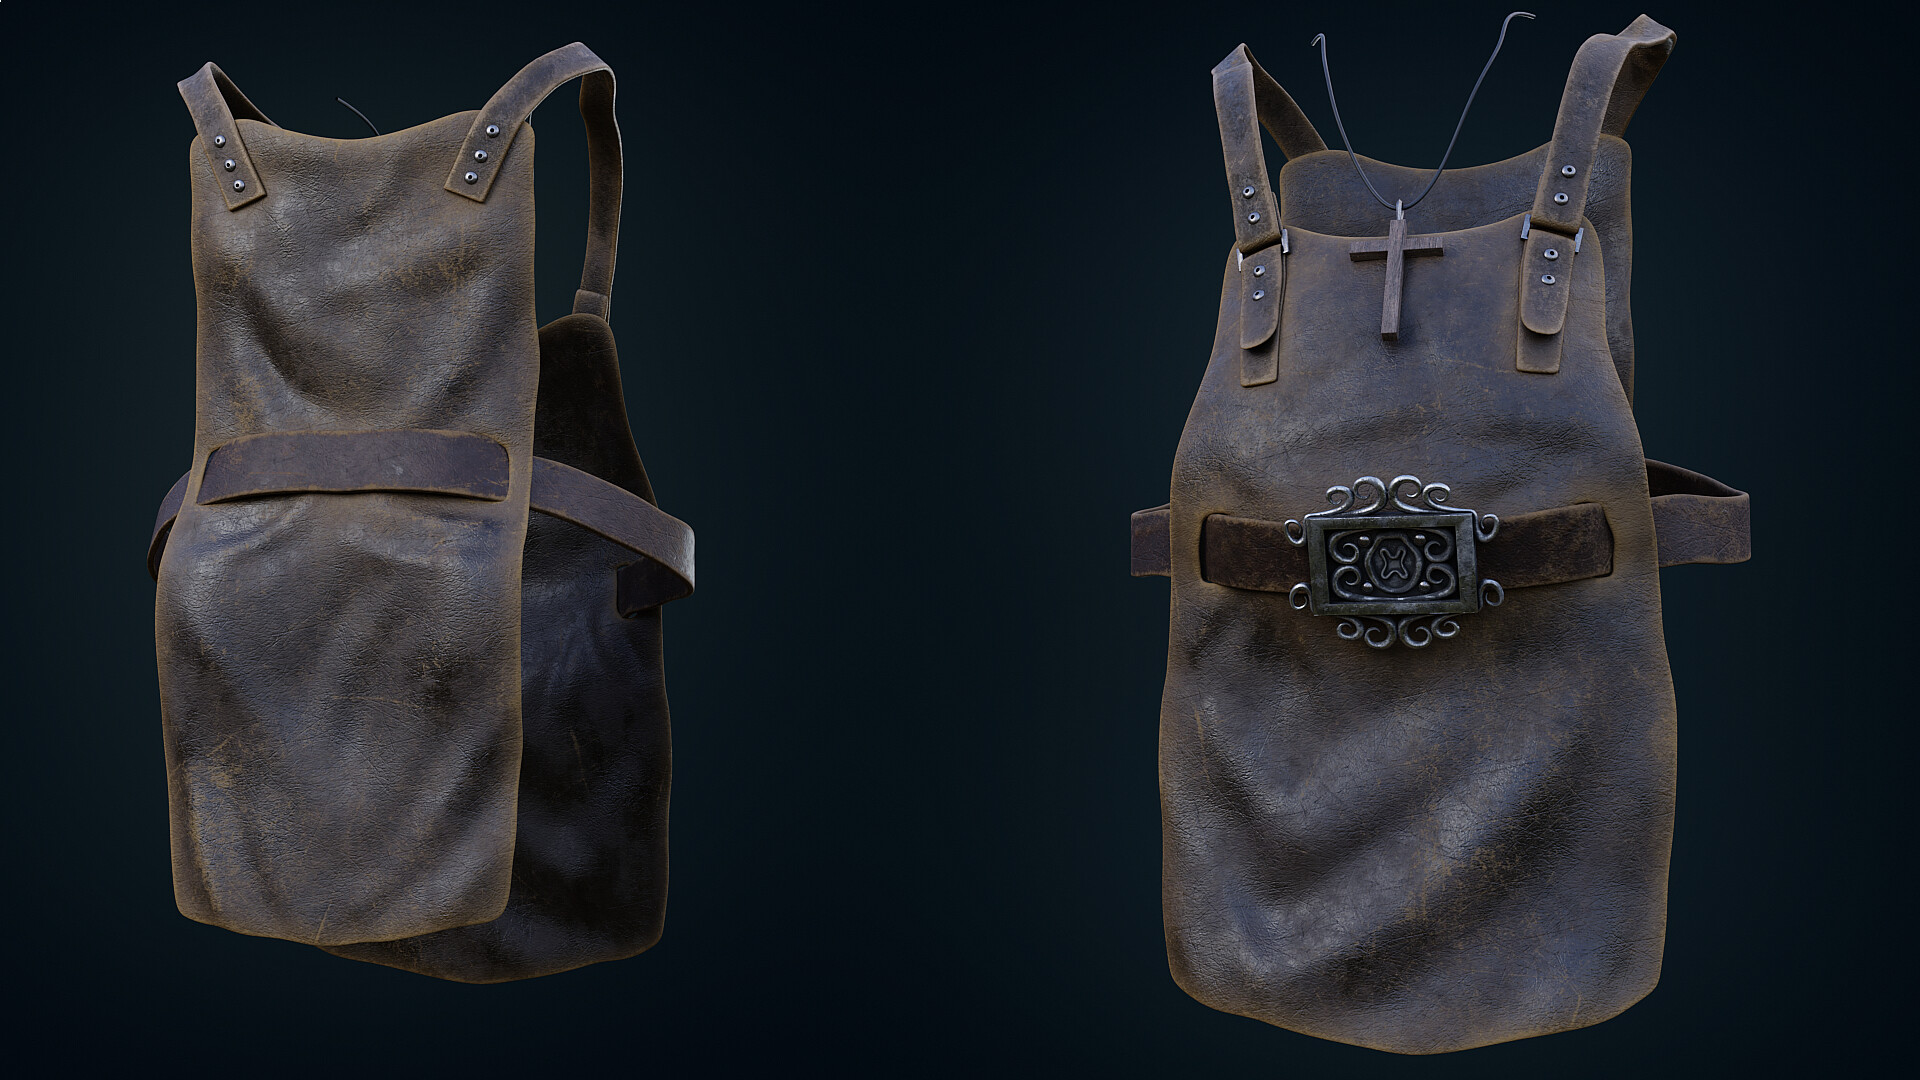 Medieval Leather bag - Finished Projects - Blender Artists Community